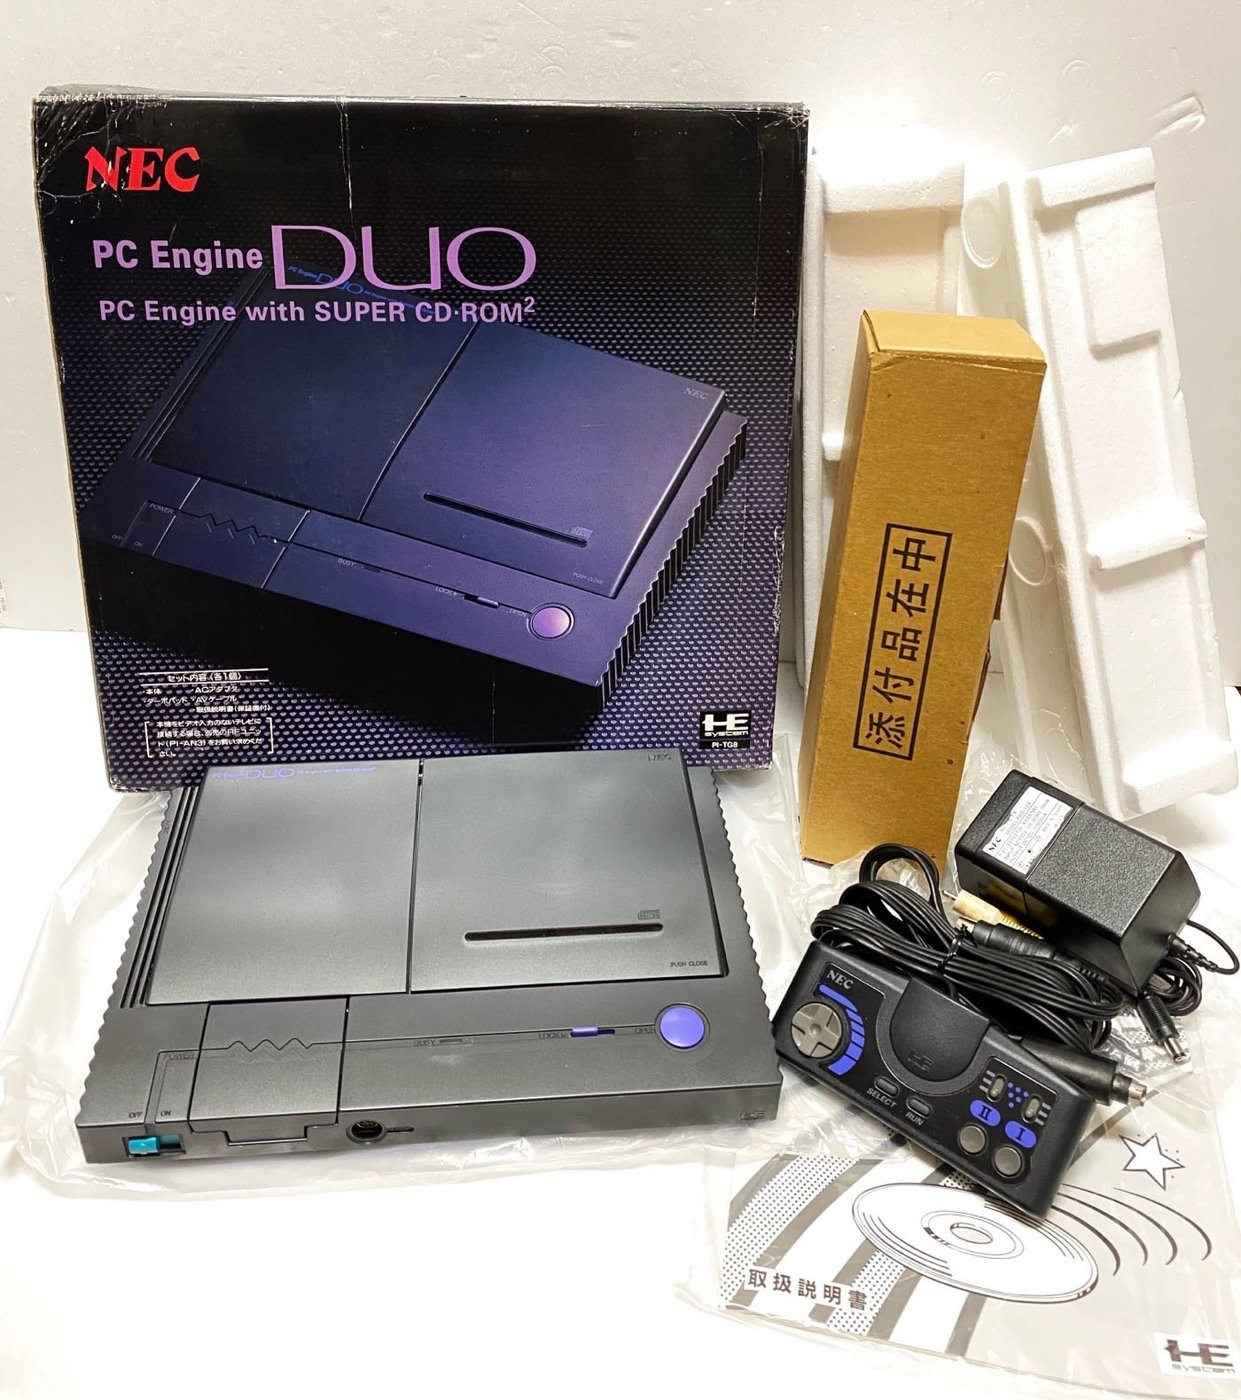 NEC PC Engine DUO with Super CD-Rom2 主機 PCE 二合一主機 日本製